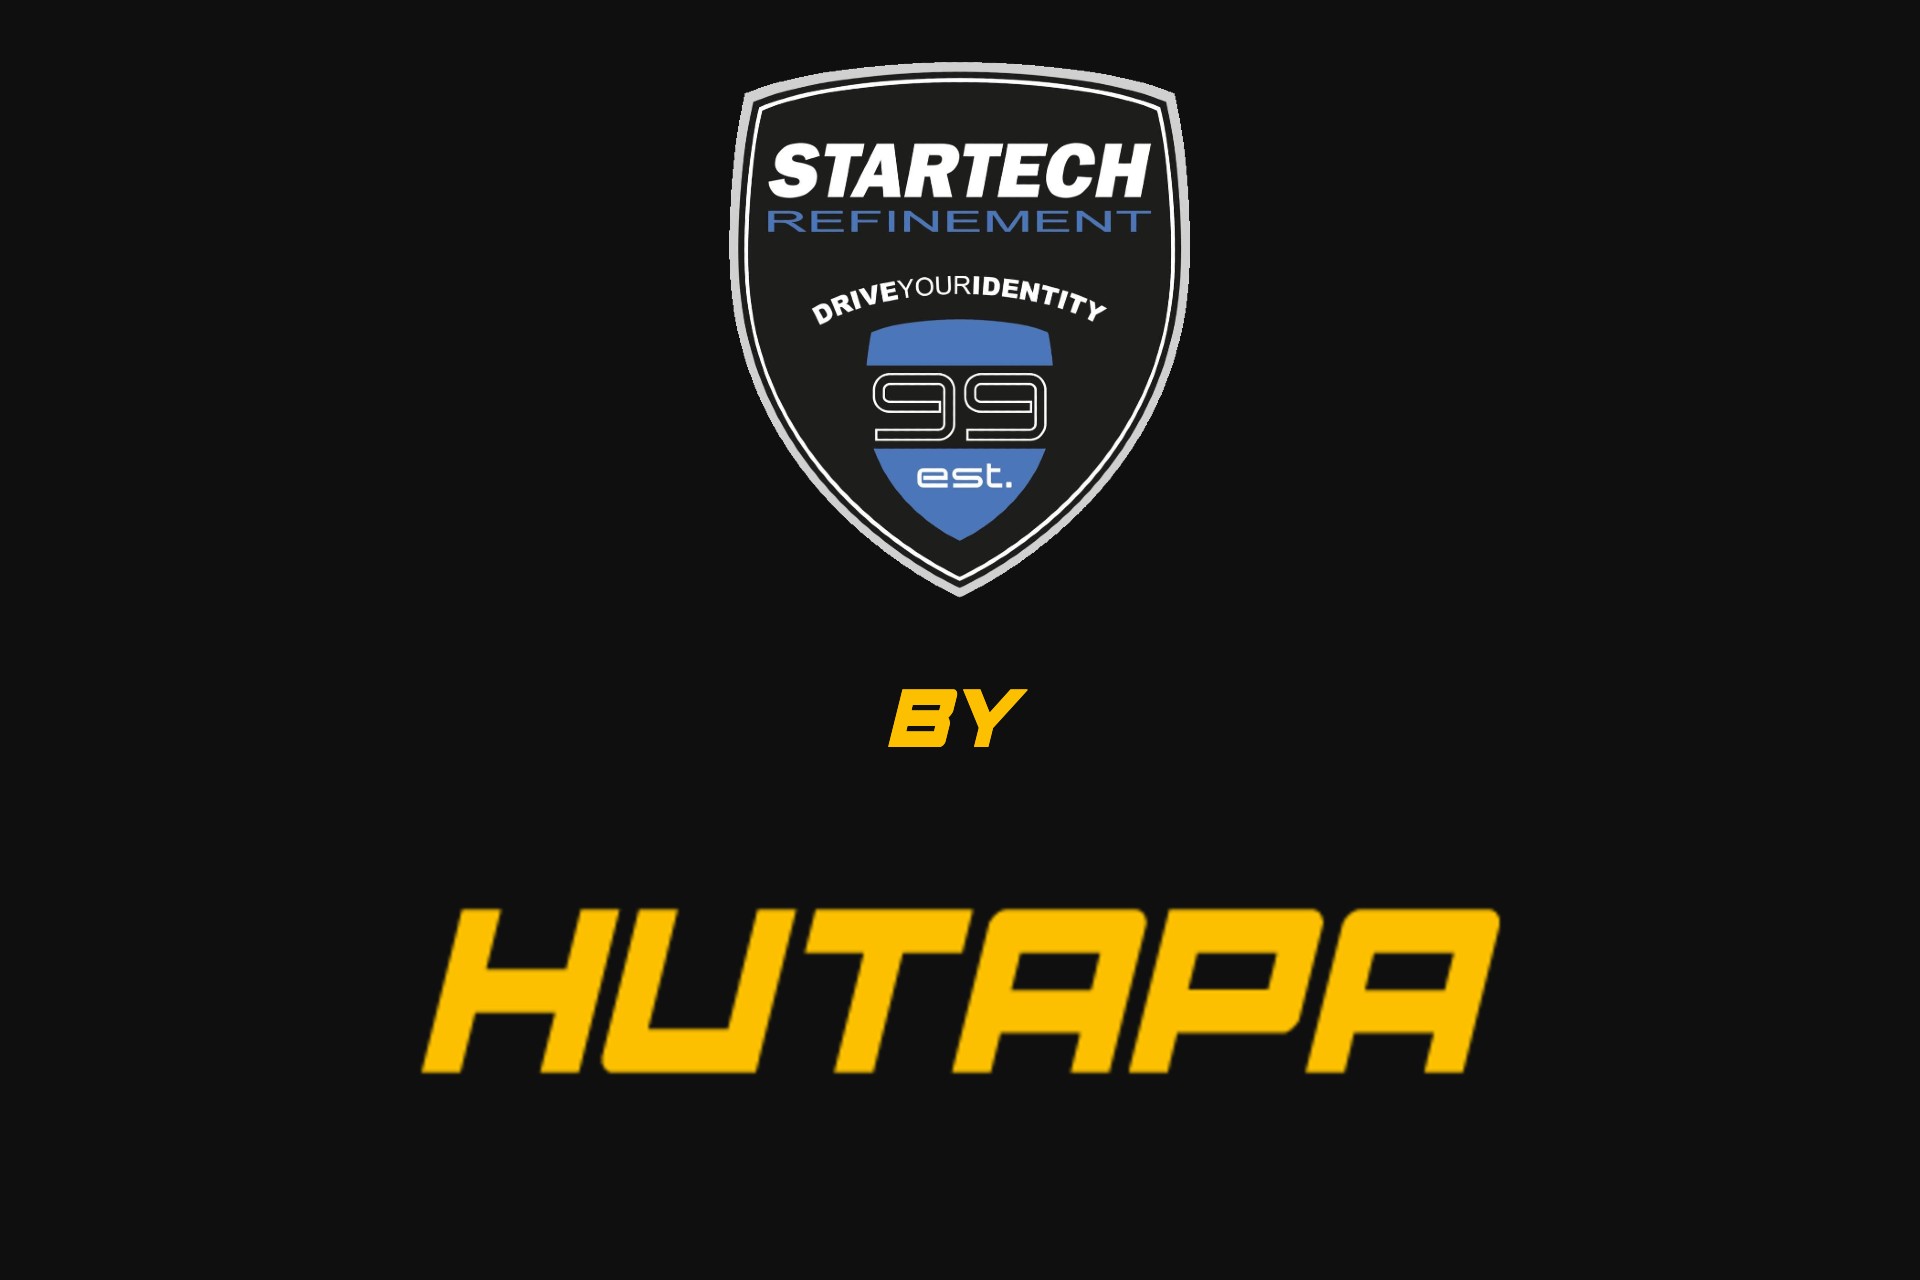 Startech Refinement - Autogarage Hutapa